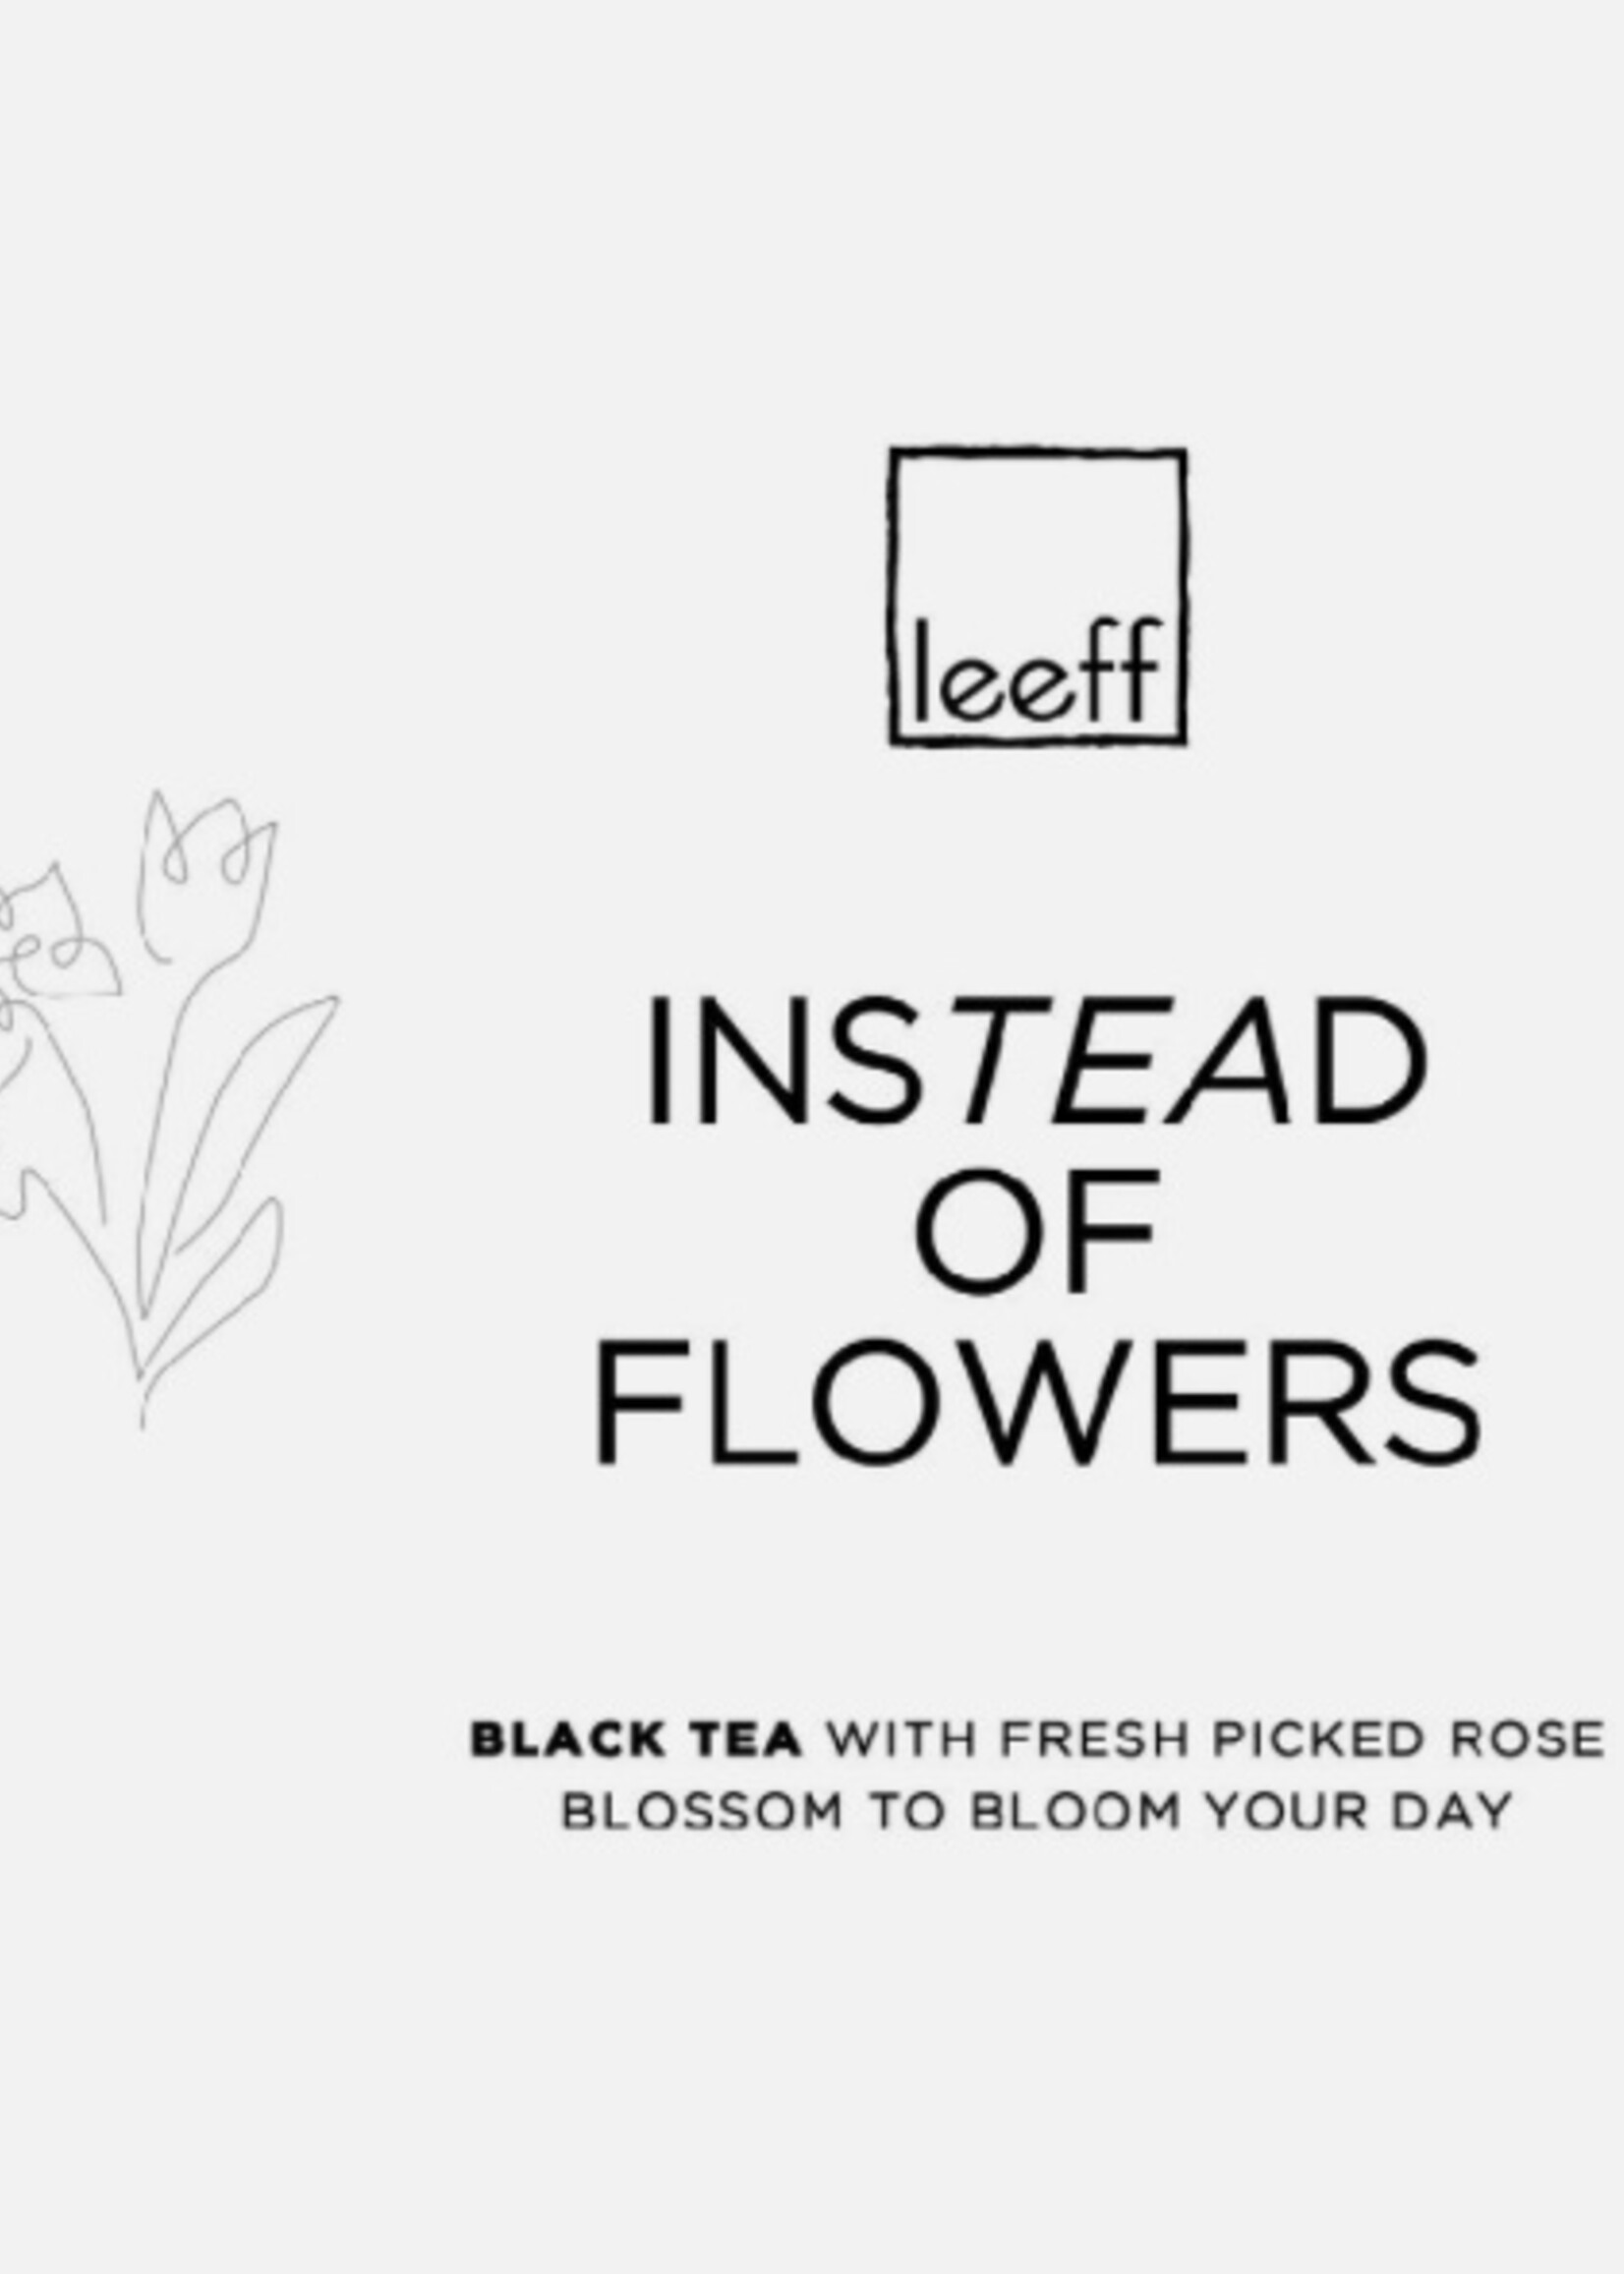 Leeff Thé - instead of flowers